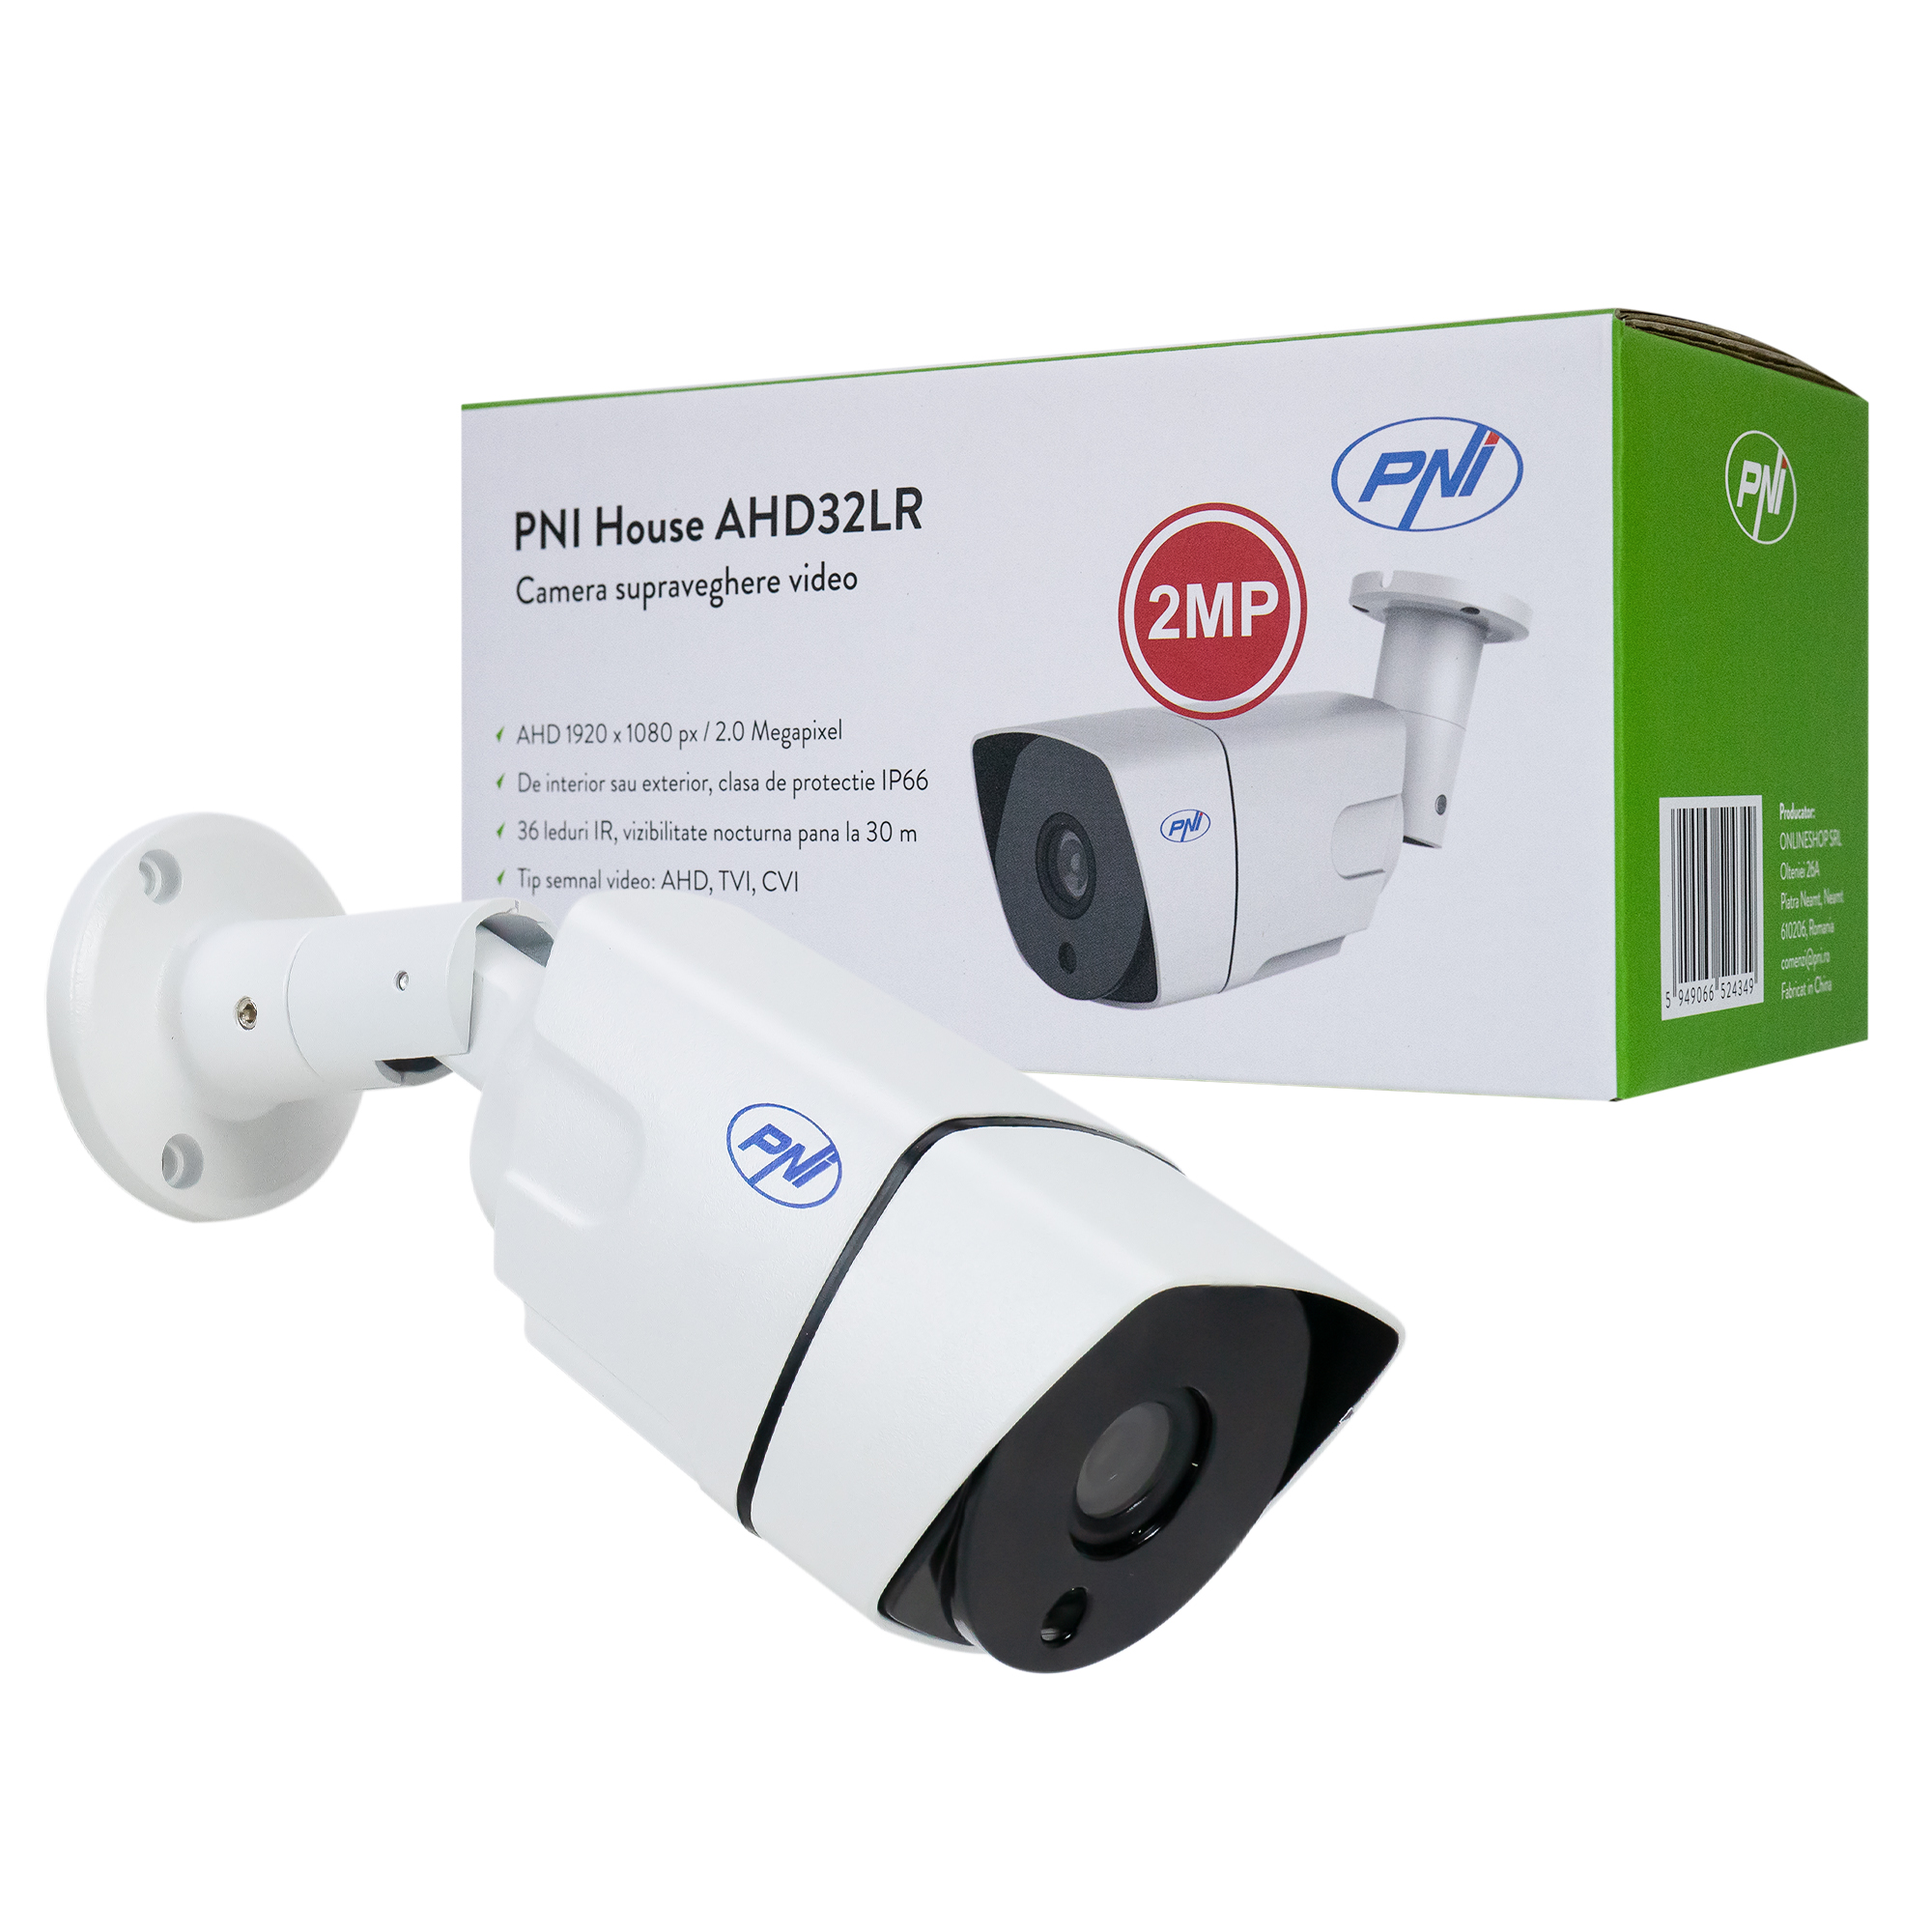 Video surveillance camera PNI House AHD32LR